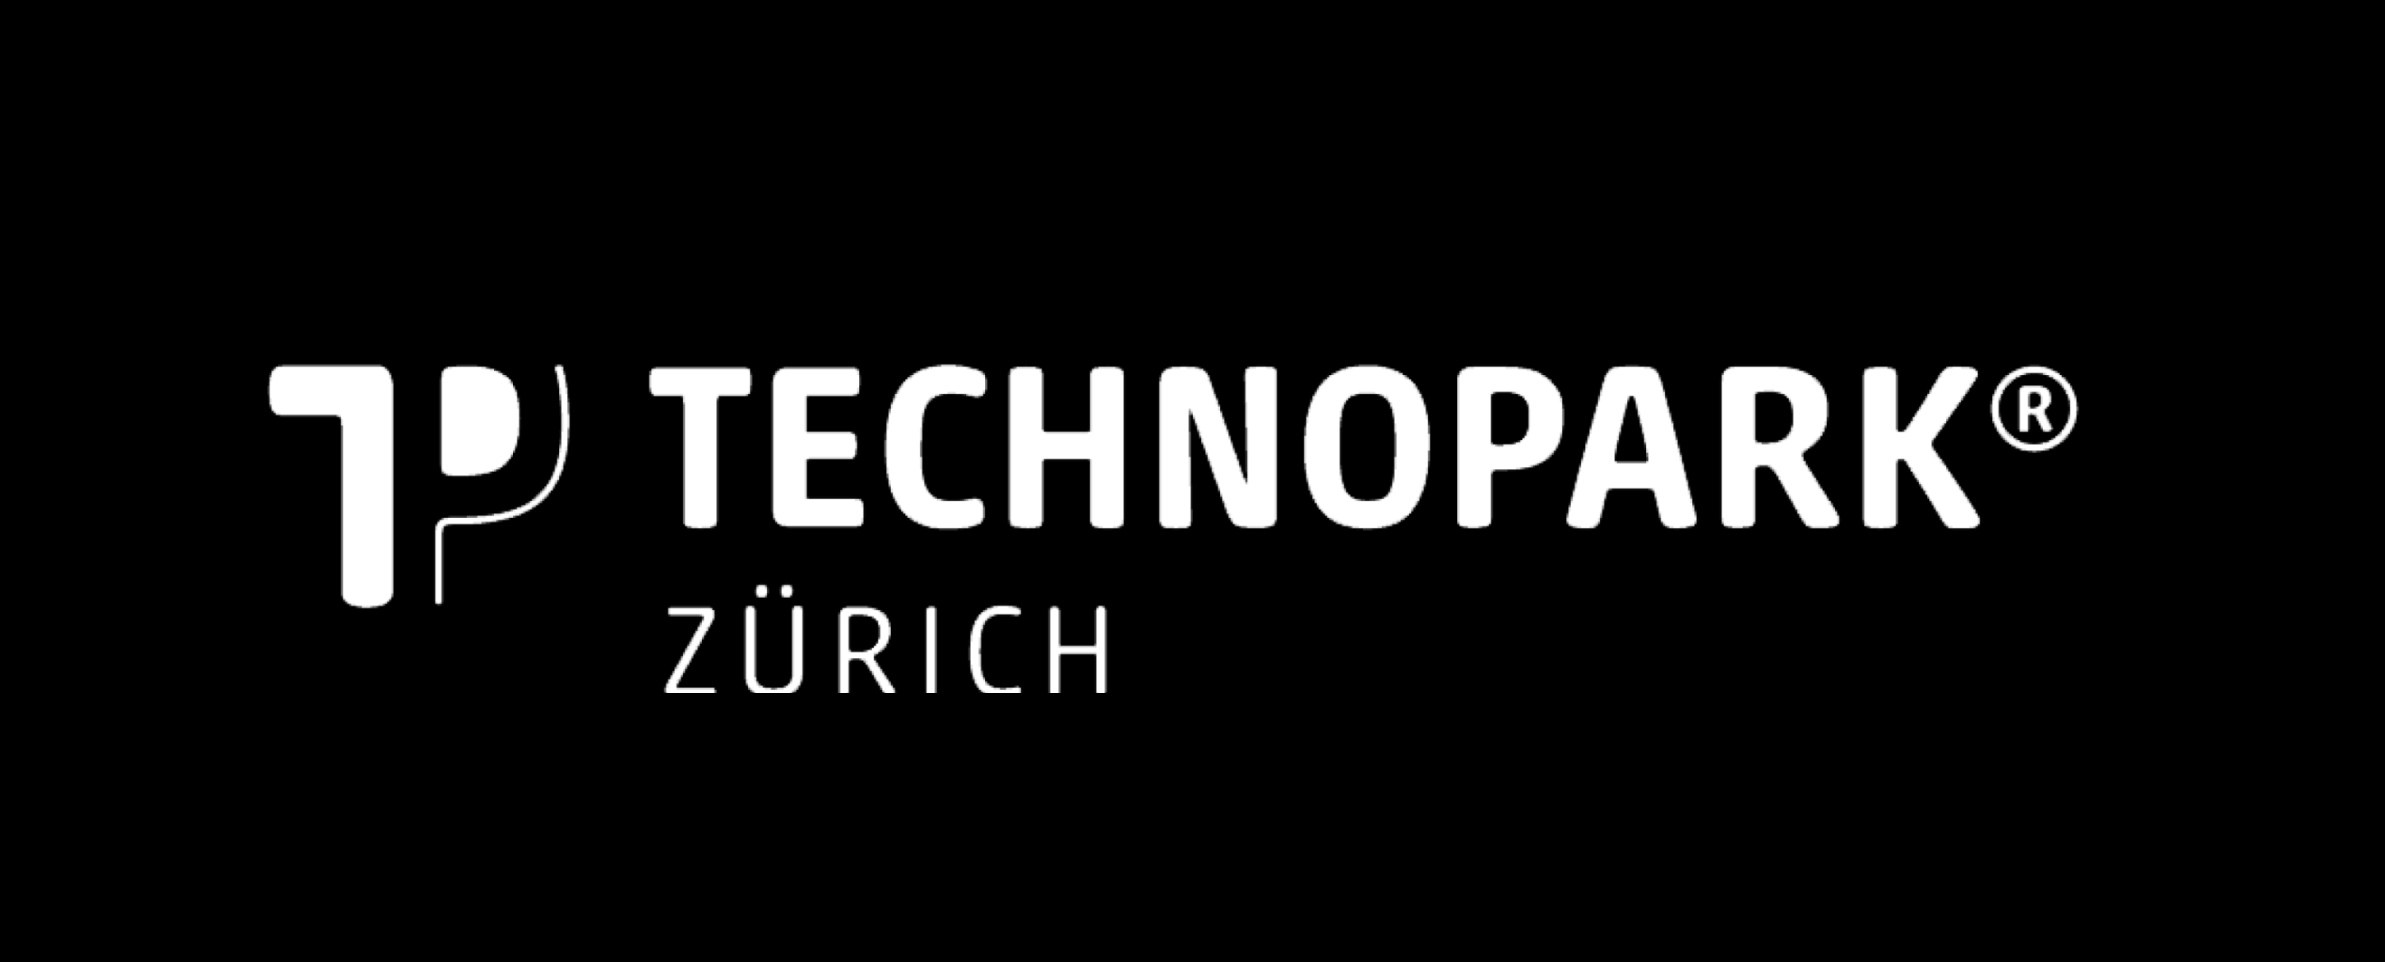 NetworkP Technopark Zürich